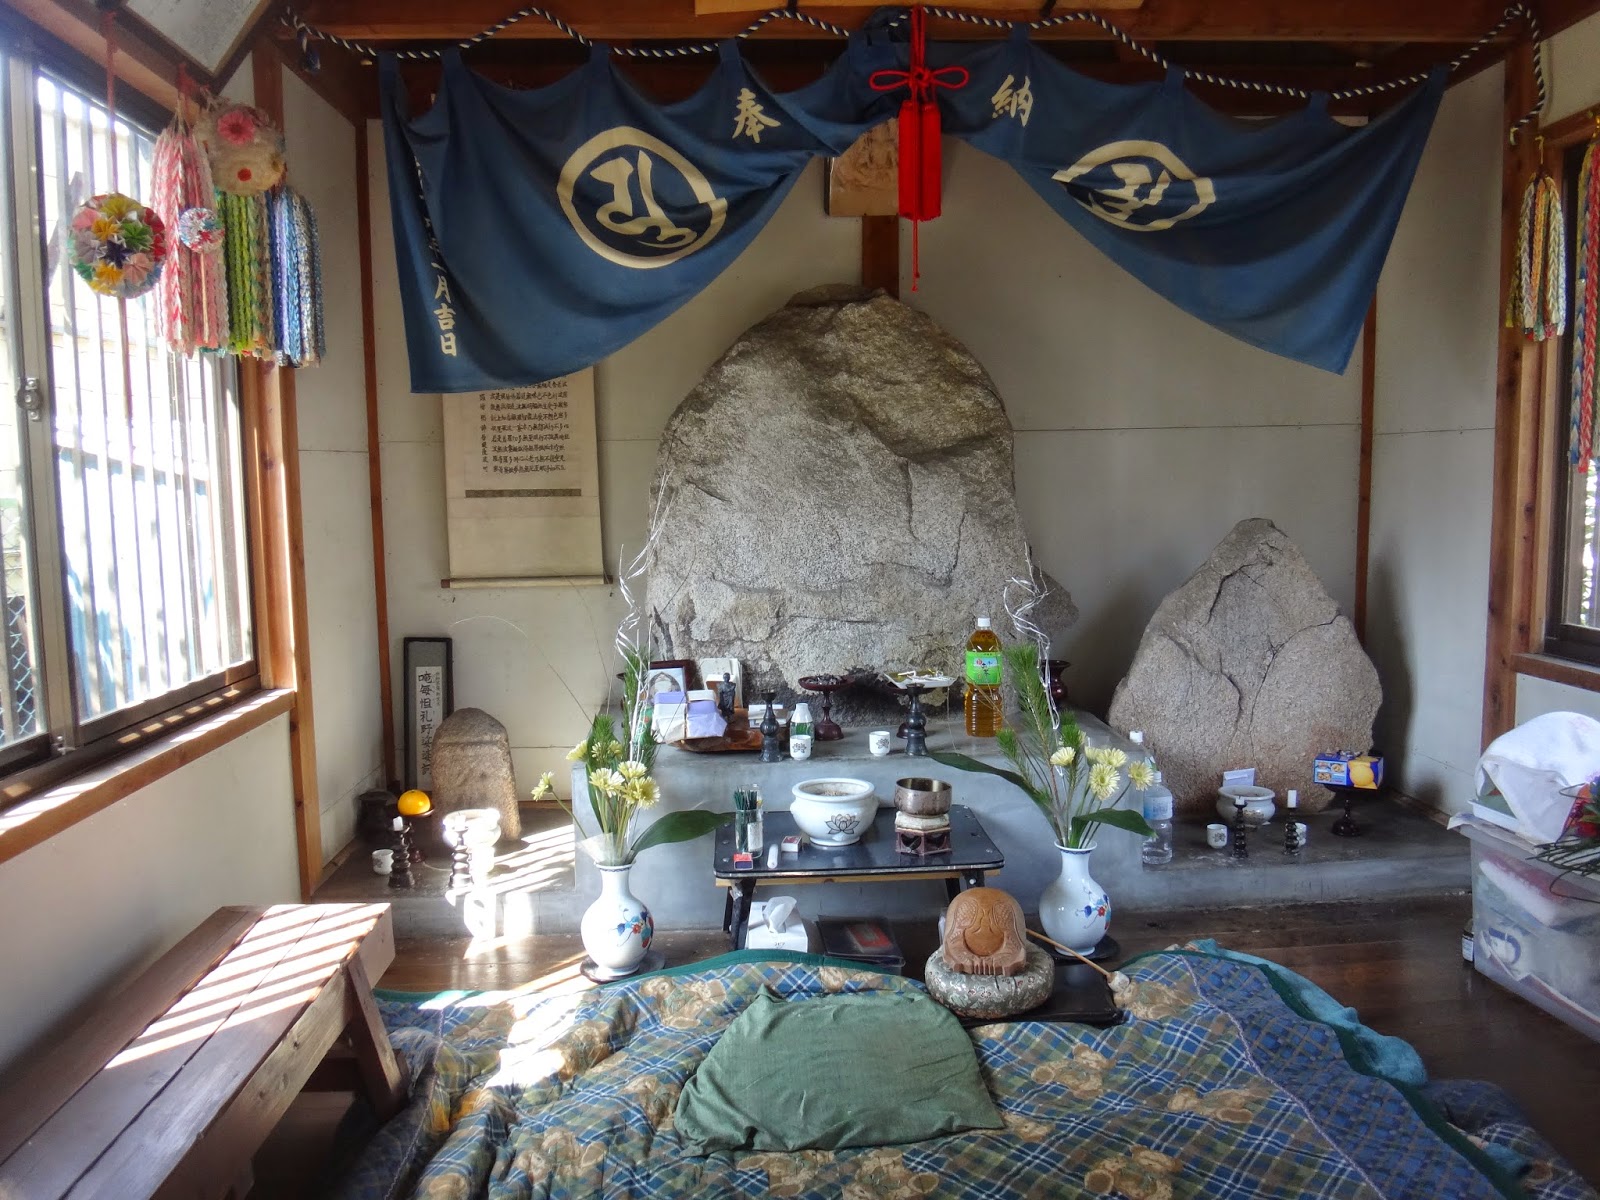 JAPAN through my eyes: A small Buddhist altar